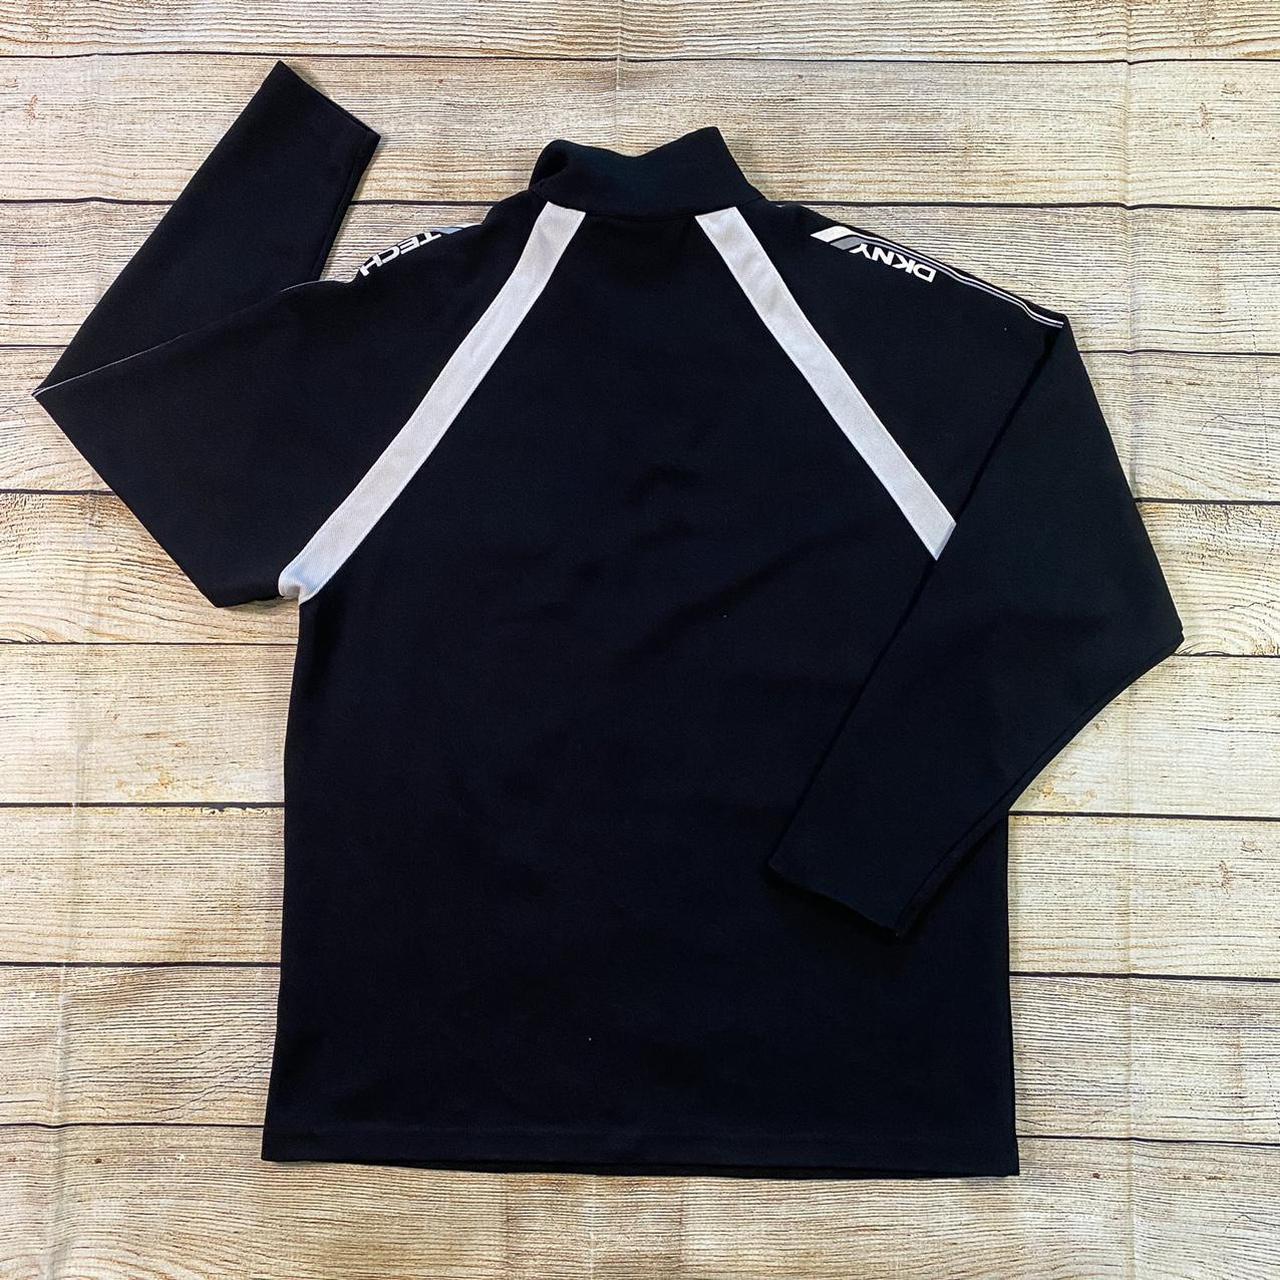 DKNY Men's Black and White Sweatshirt (2)